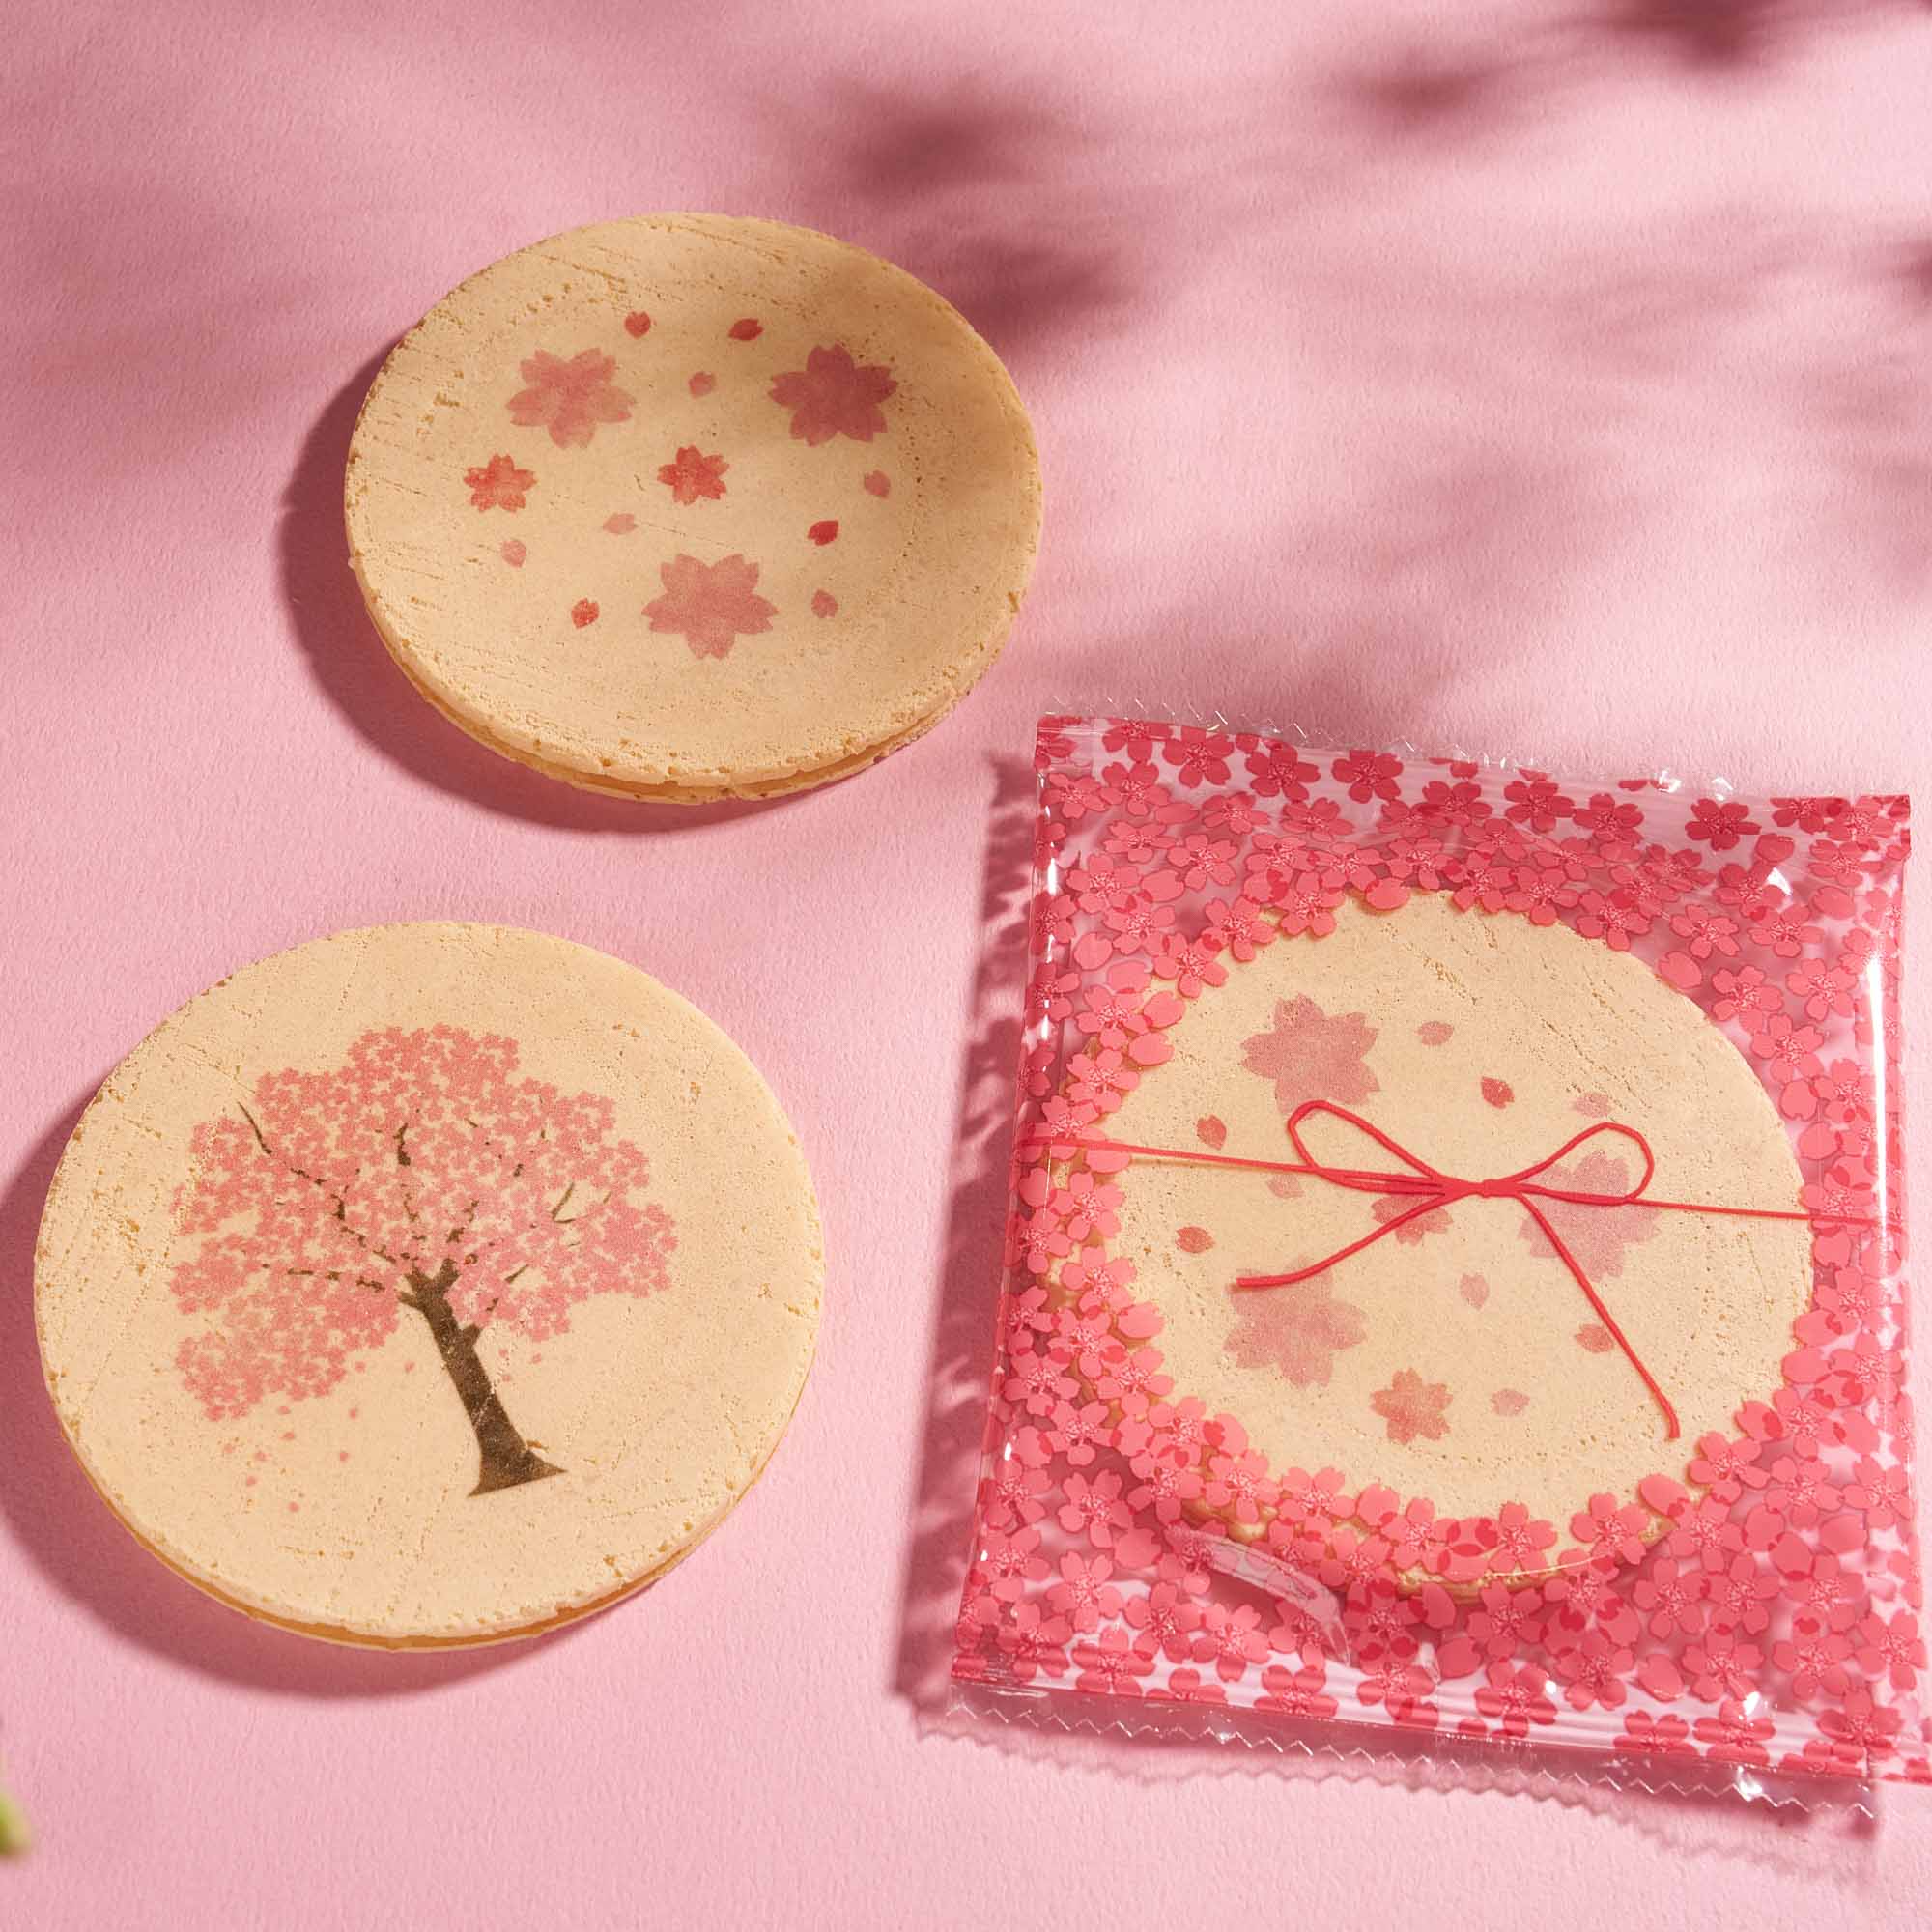 Limited Edition Sakura Collection | Bokksu Boutique